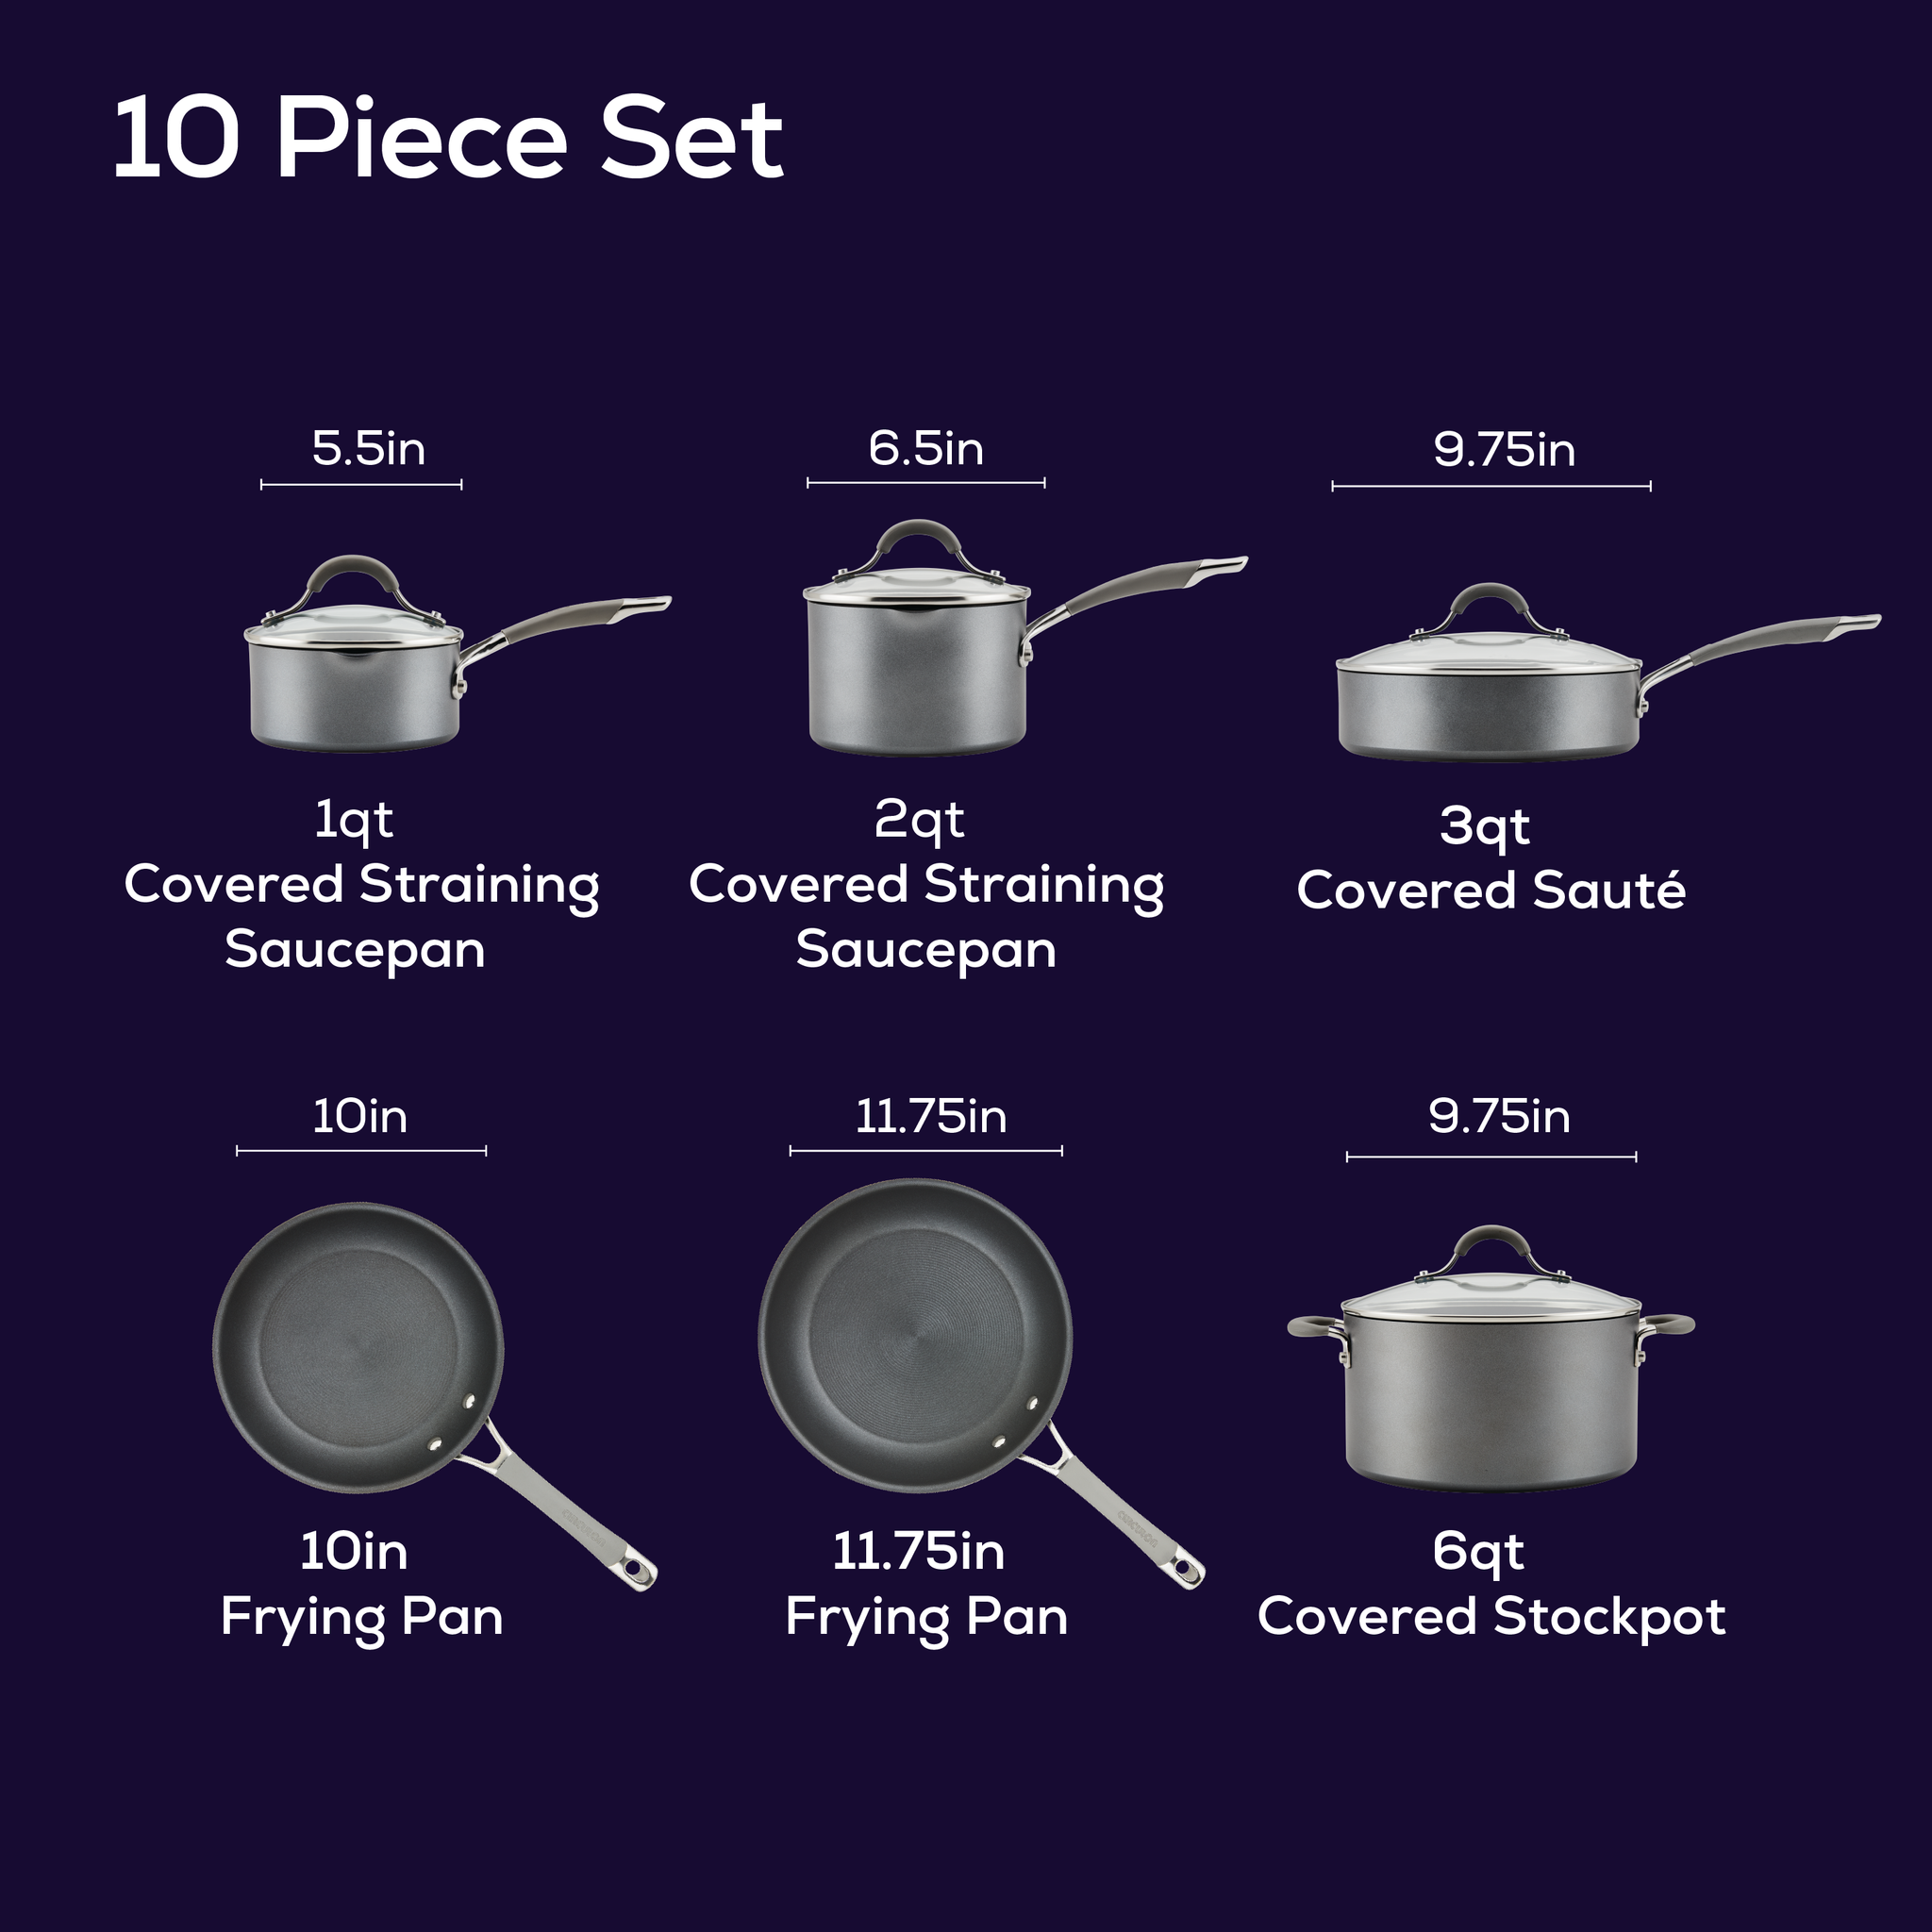 Circulon A1 Series 10-Piece Aluminum Nonstick Cookware Set in